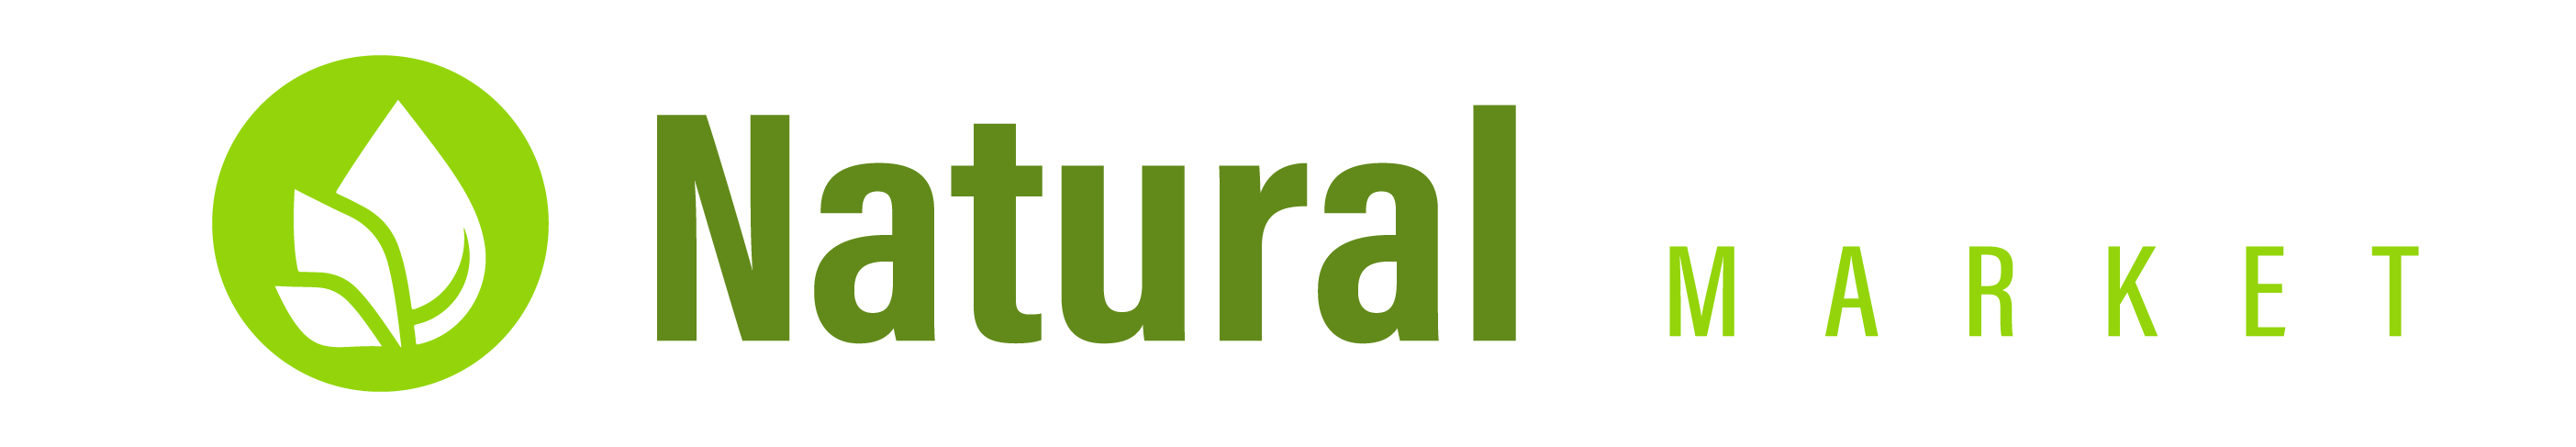 Natural Market logo, superfood 